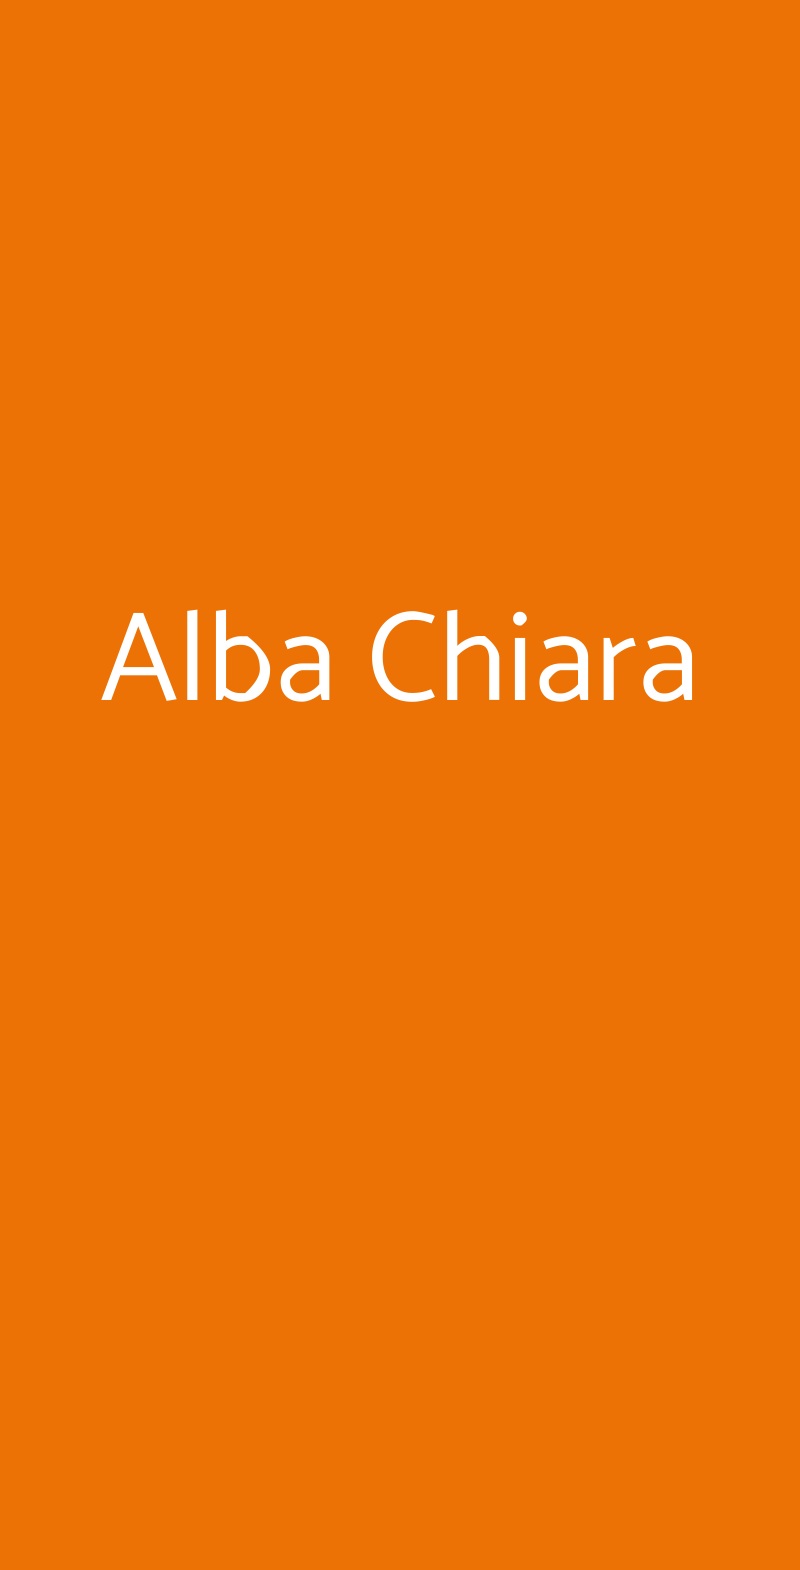 Alba Chiara Milano menù 1 pagina